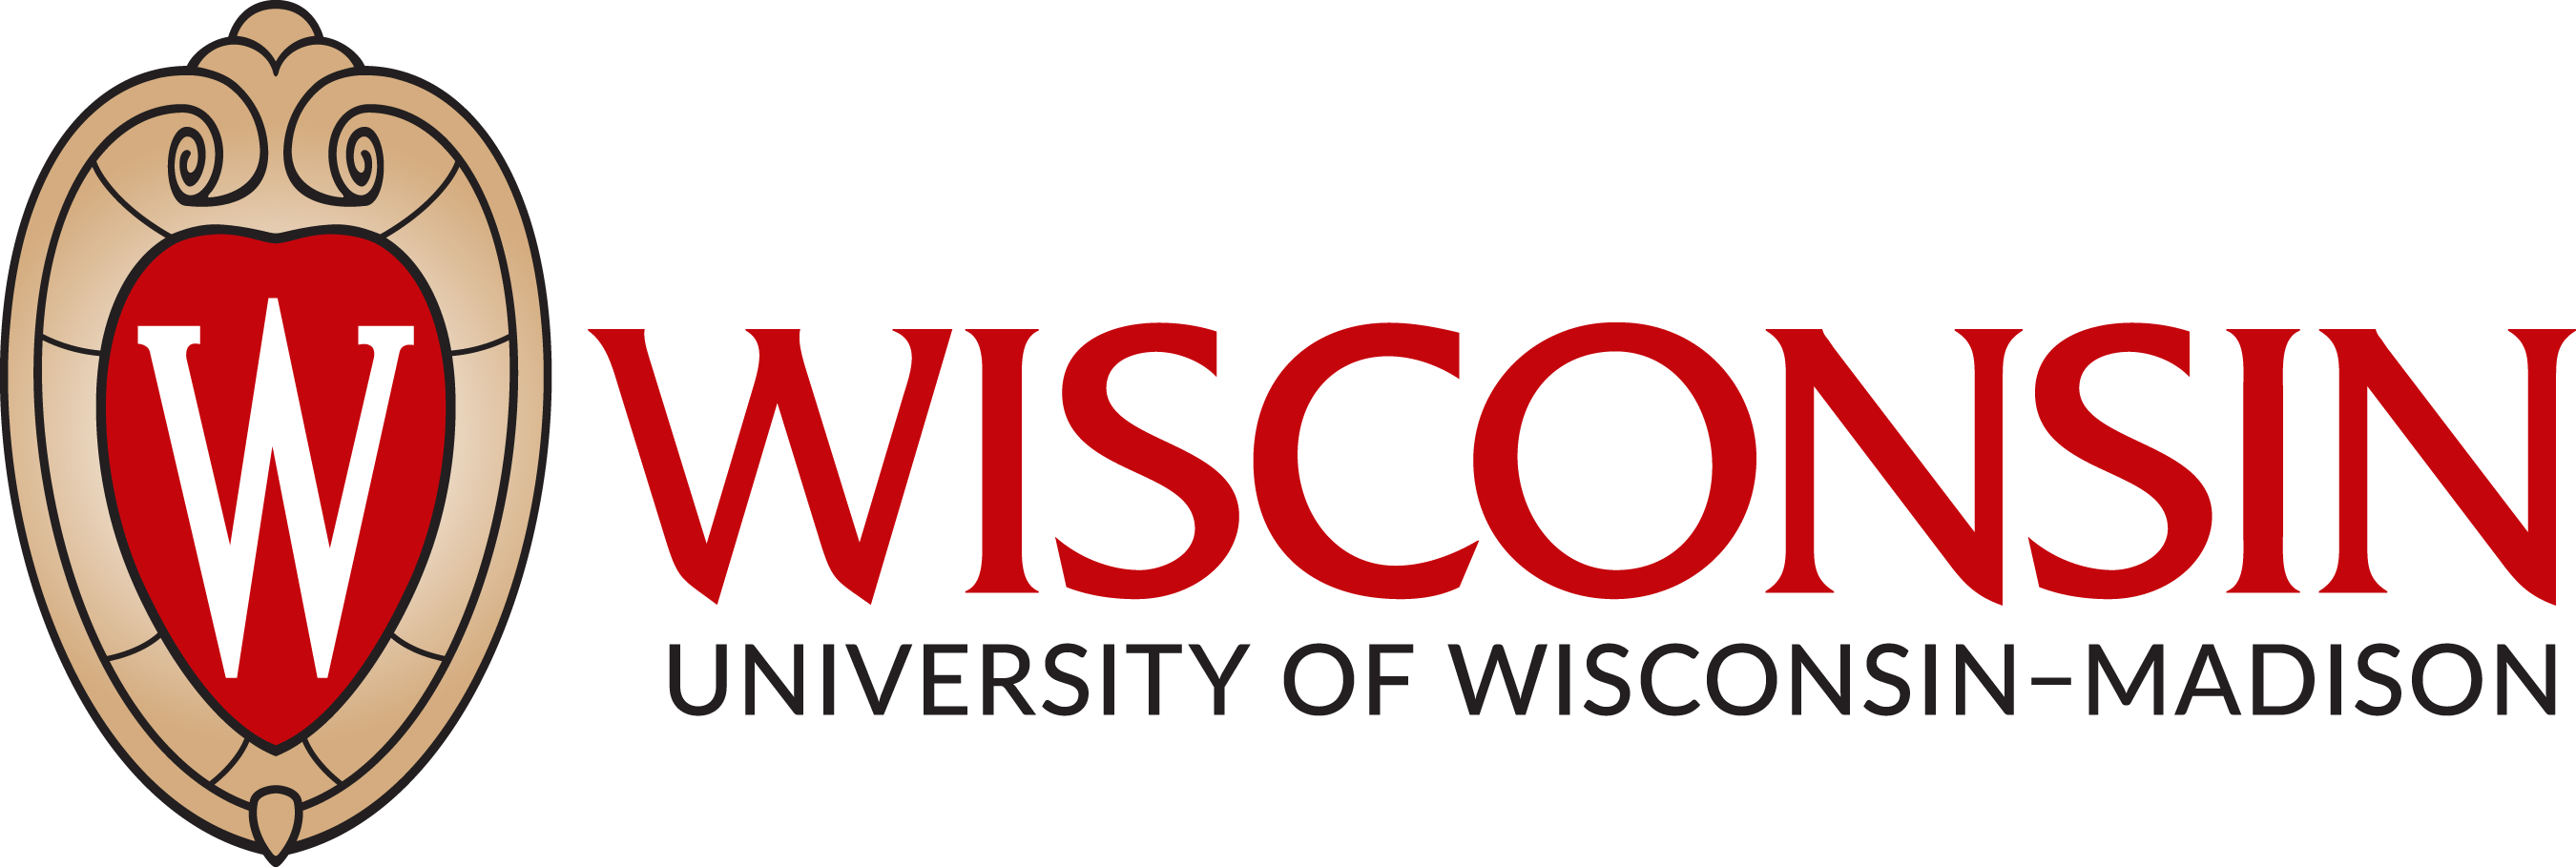 University_of_Wisconsin